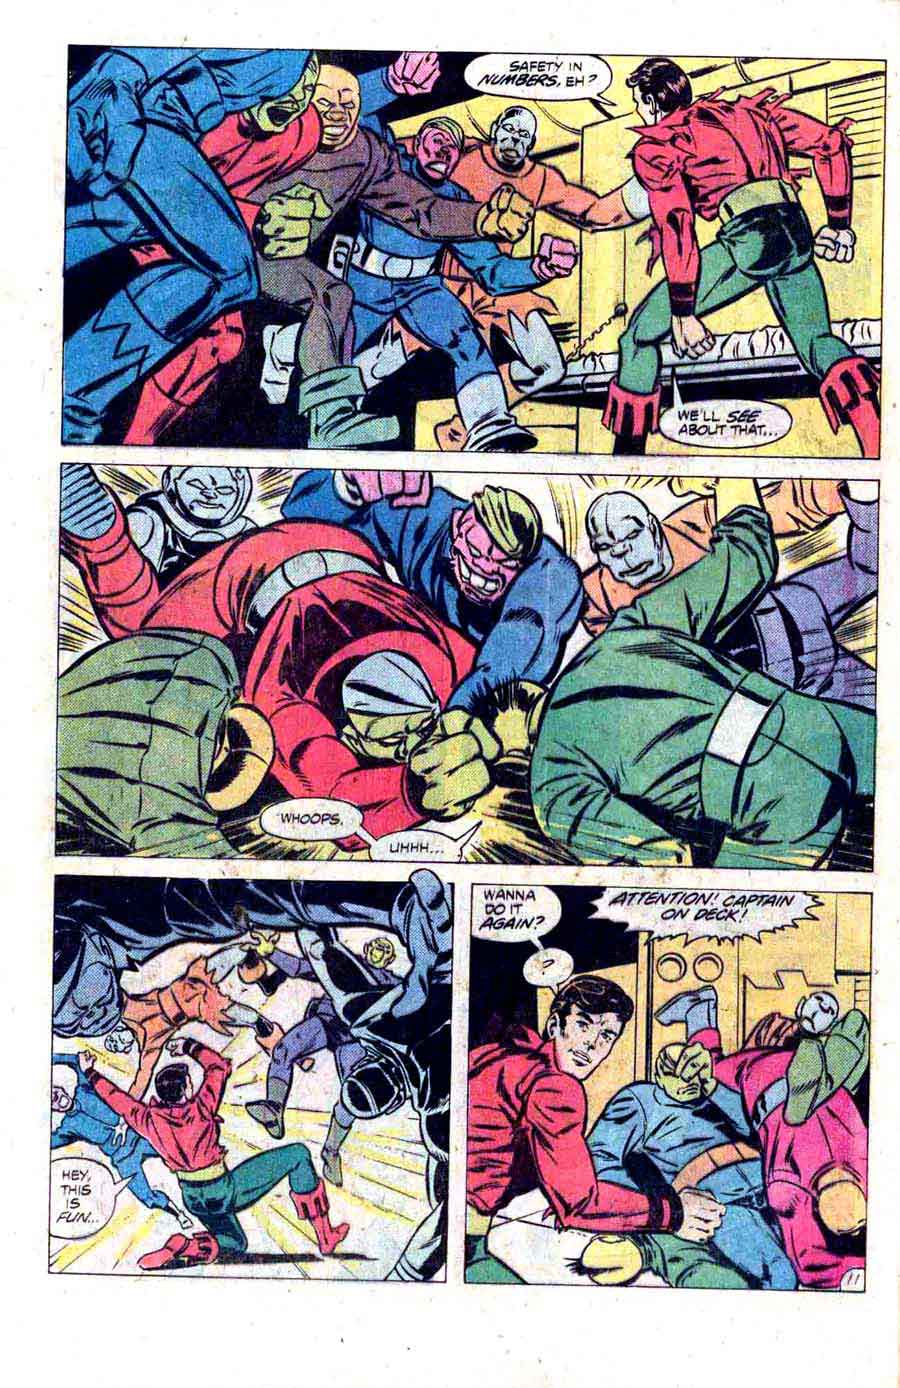 Legion of Super-Heroes v2 #274 - Steve Ditko dc 1980s comic book page art